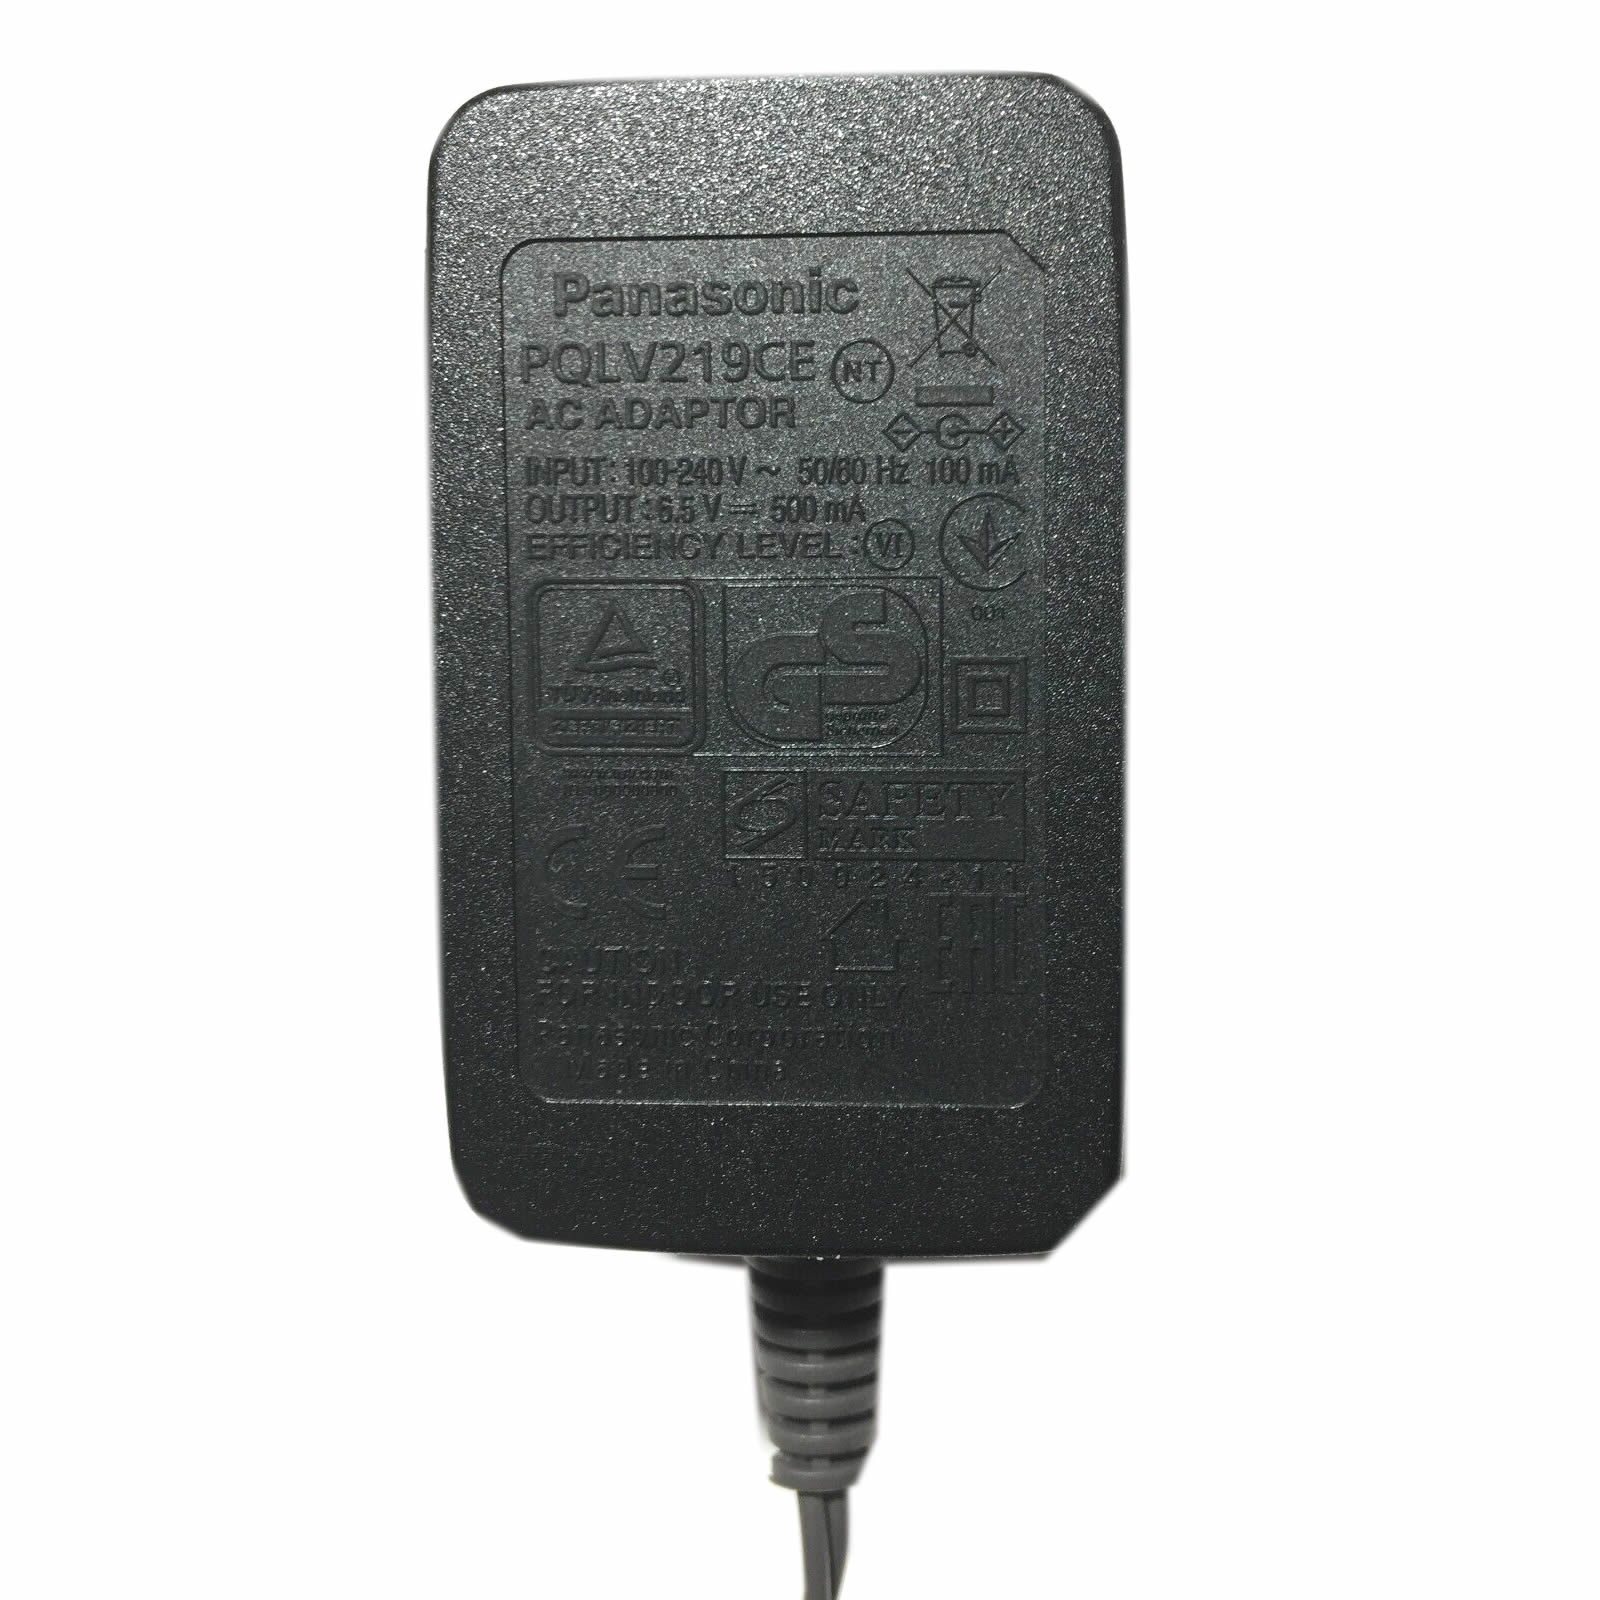 Panasonic 6.5V 0.5A 3.25W PLVQ219CE,PNLC1007ZA Original Ac Adapter for Panasonic Cordless Phone